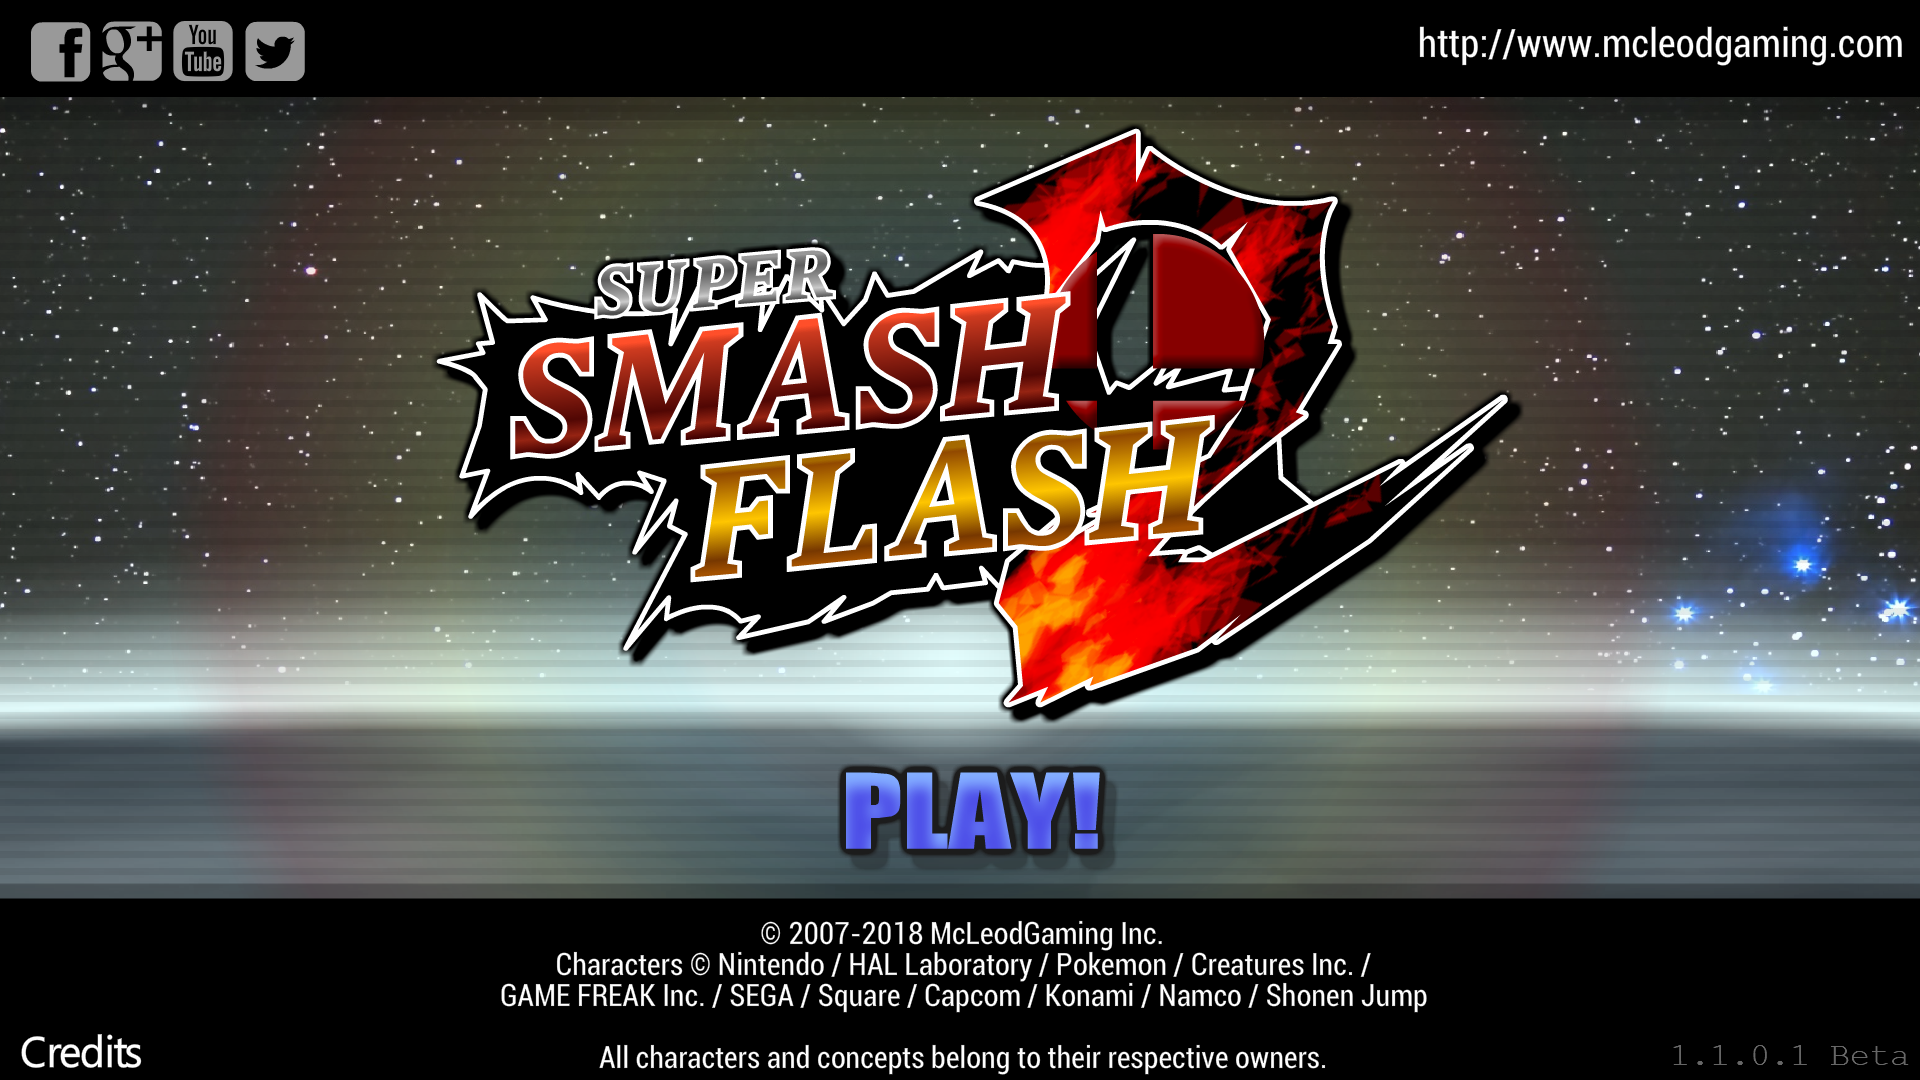 super smash flash 2 beta trailer